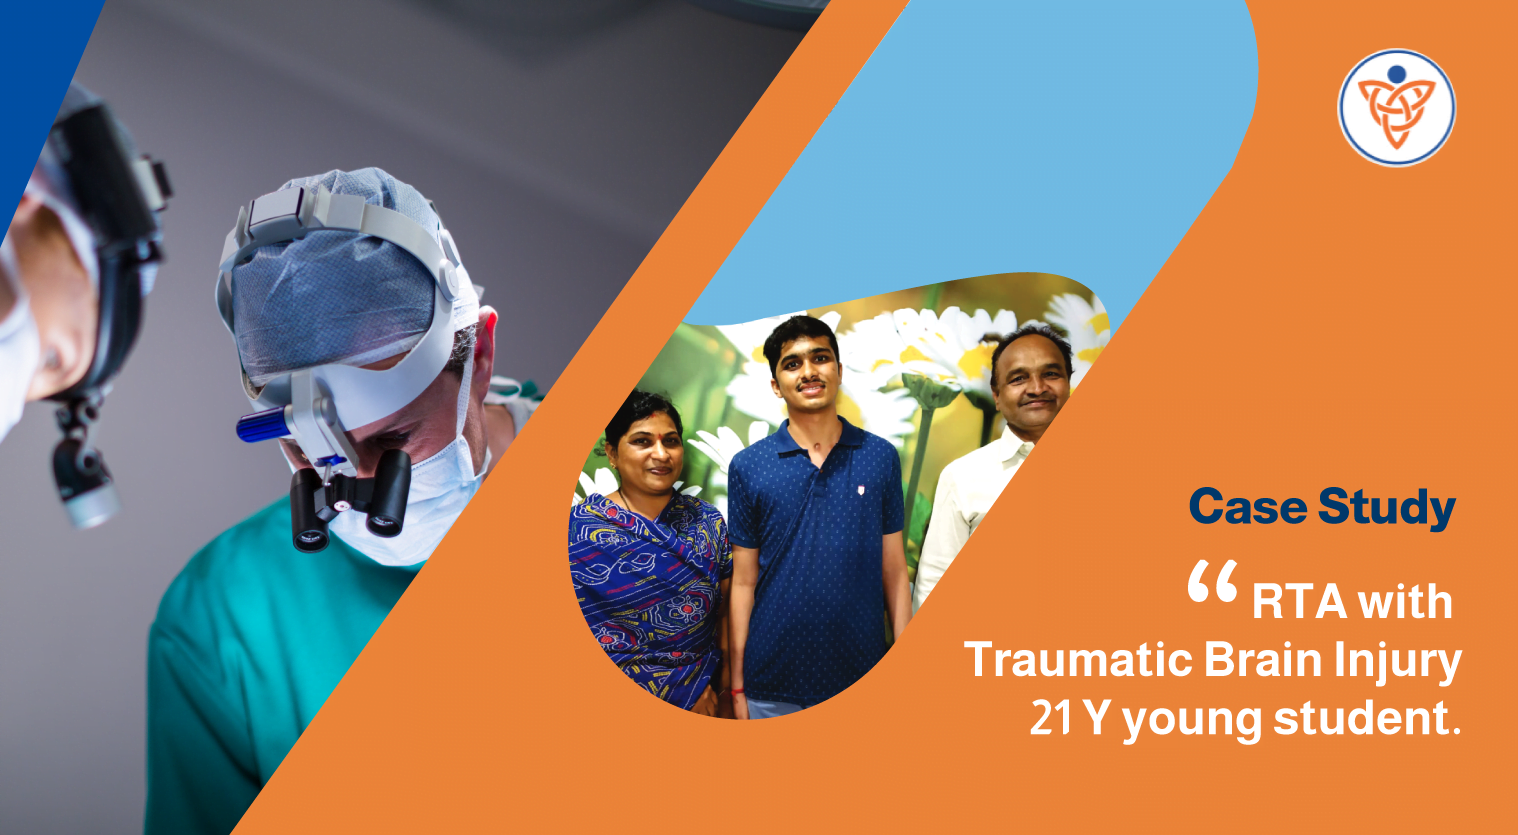 Case study - RTA with Traumatic Brain Injury at VishwaRaj Hospital